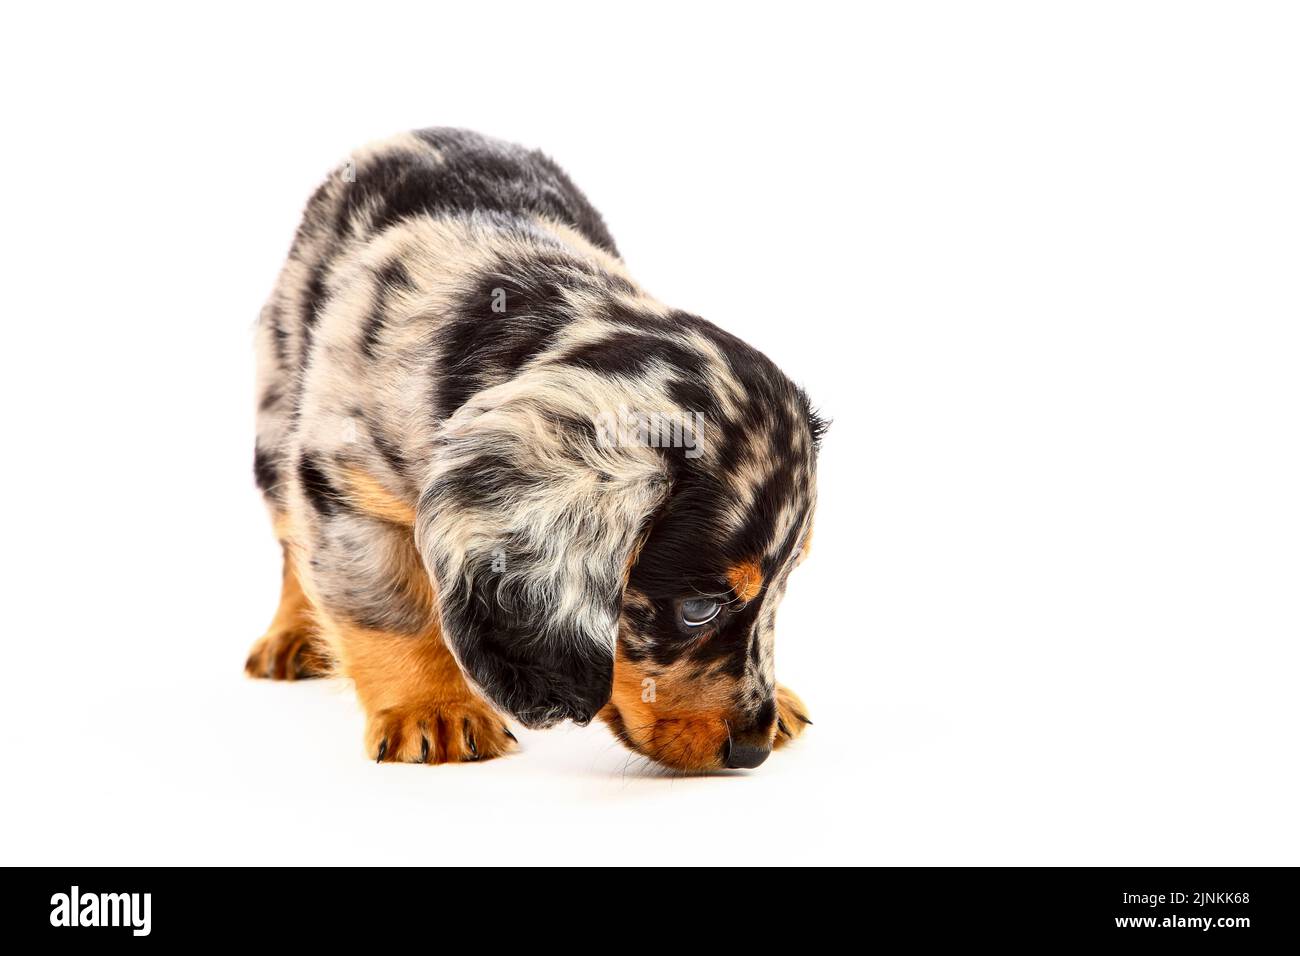 Cute Dapple Dachshund puppy dog isolated on a white background Stock Photo